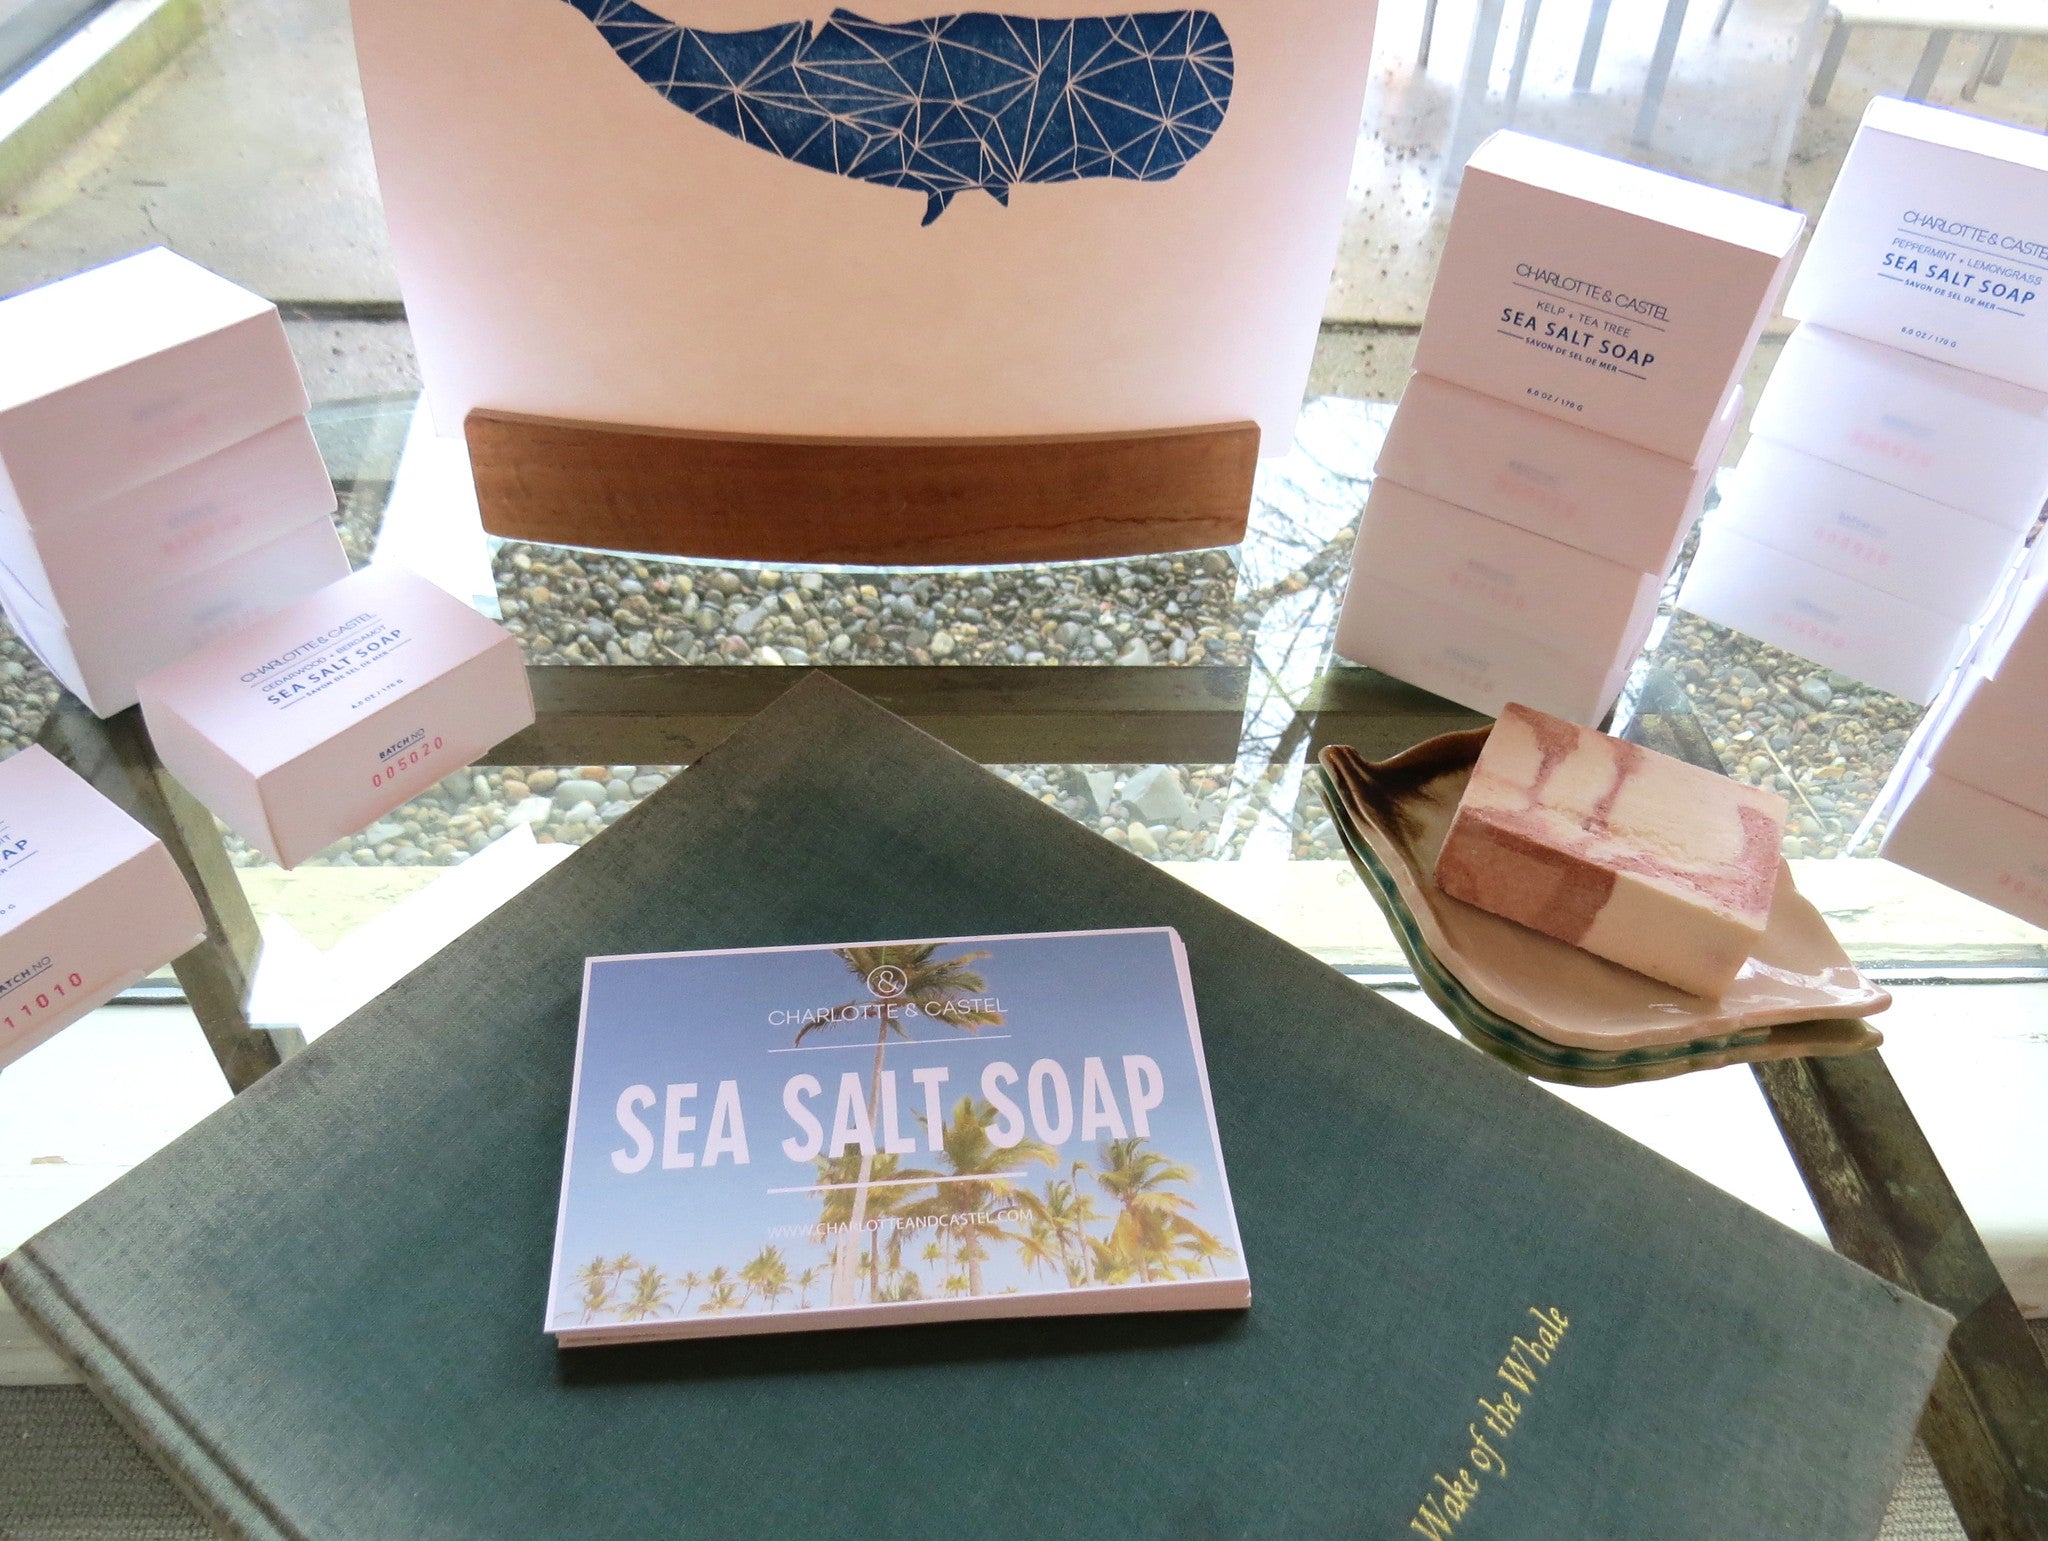 The Sea Salt Soap Voyage of Charlotte & Castel